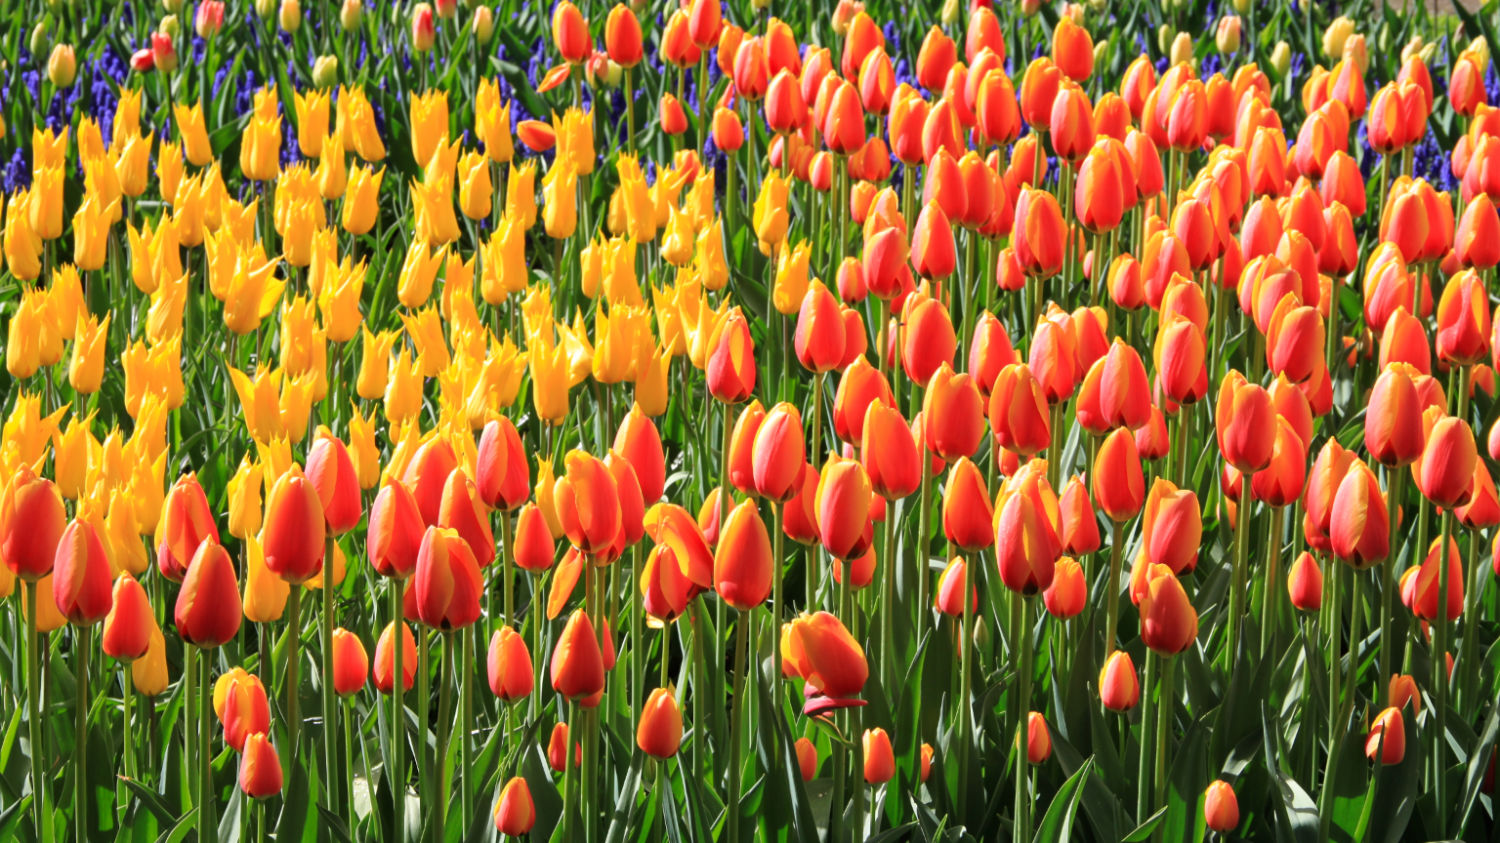 2020 visit keukenhof tulip and flower gardens, south holland